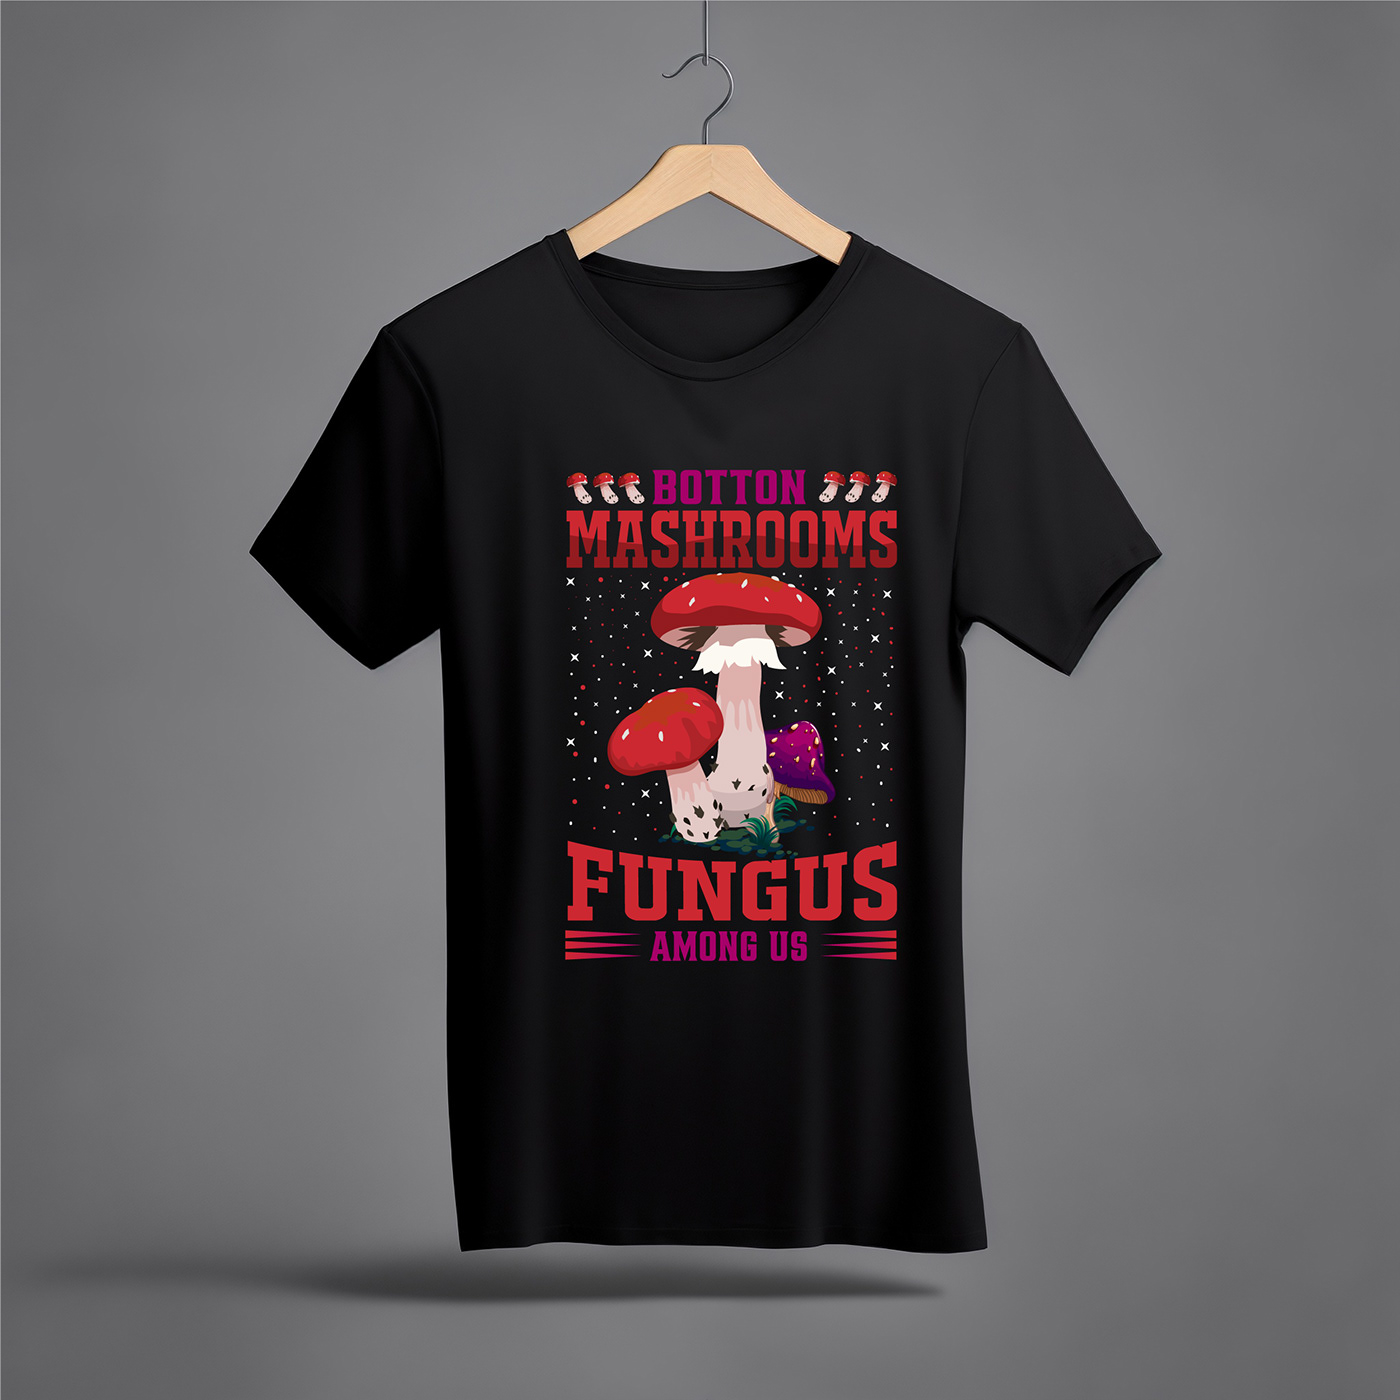 T-shirt design / Mashrooms T-shirt design 